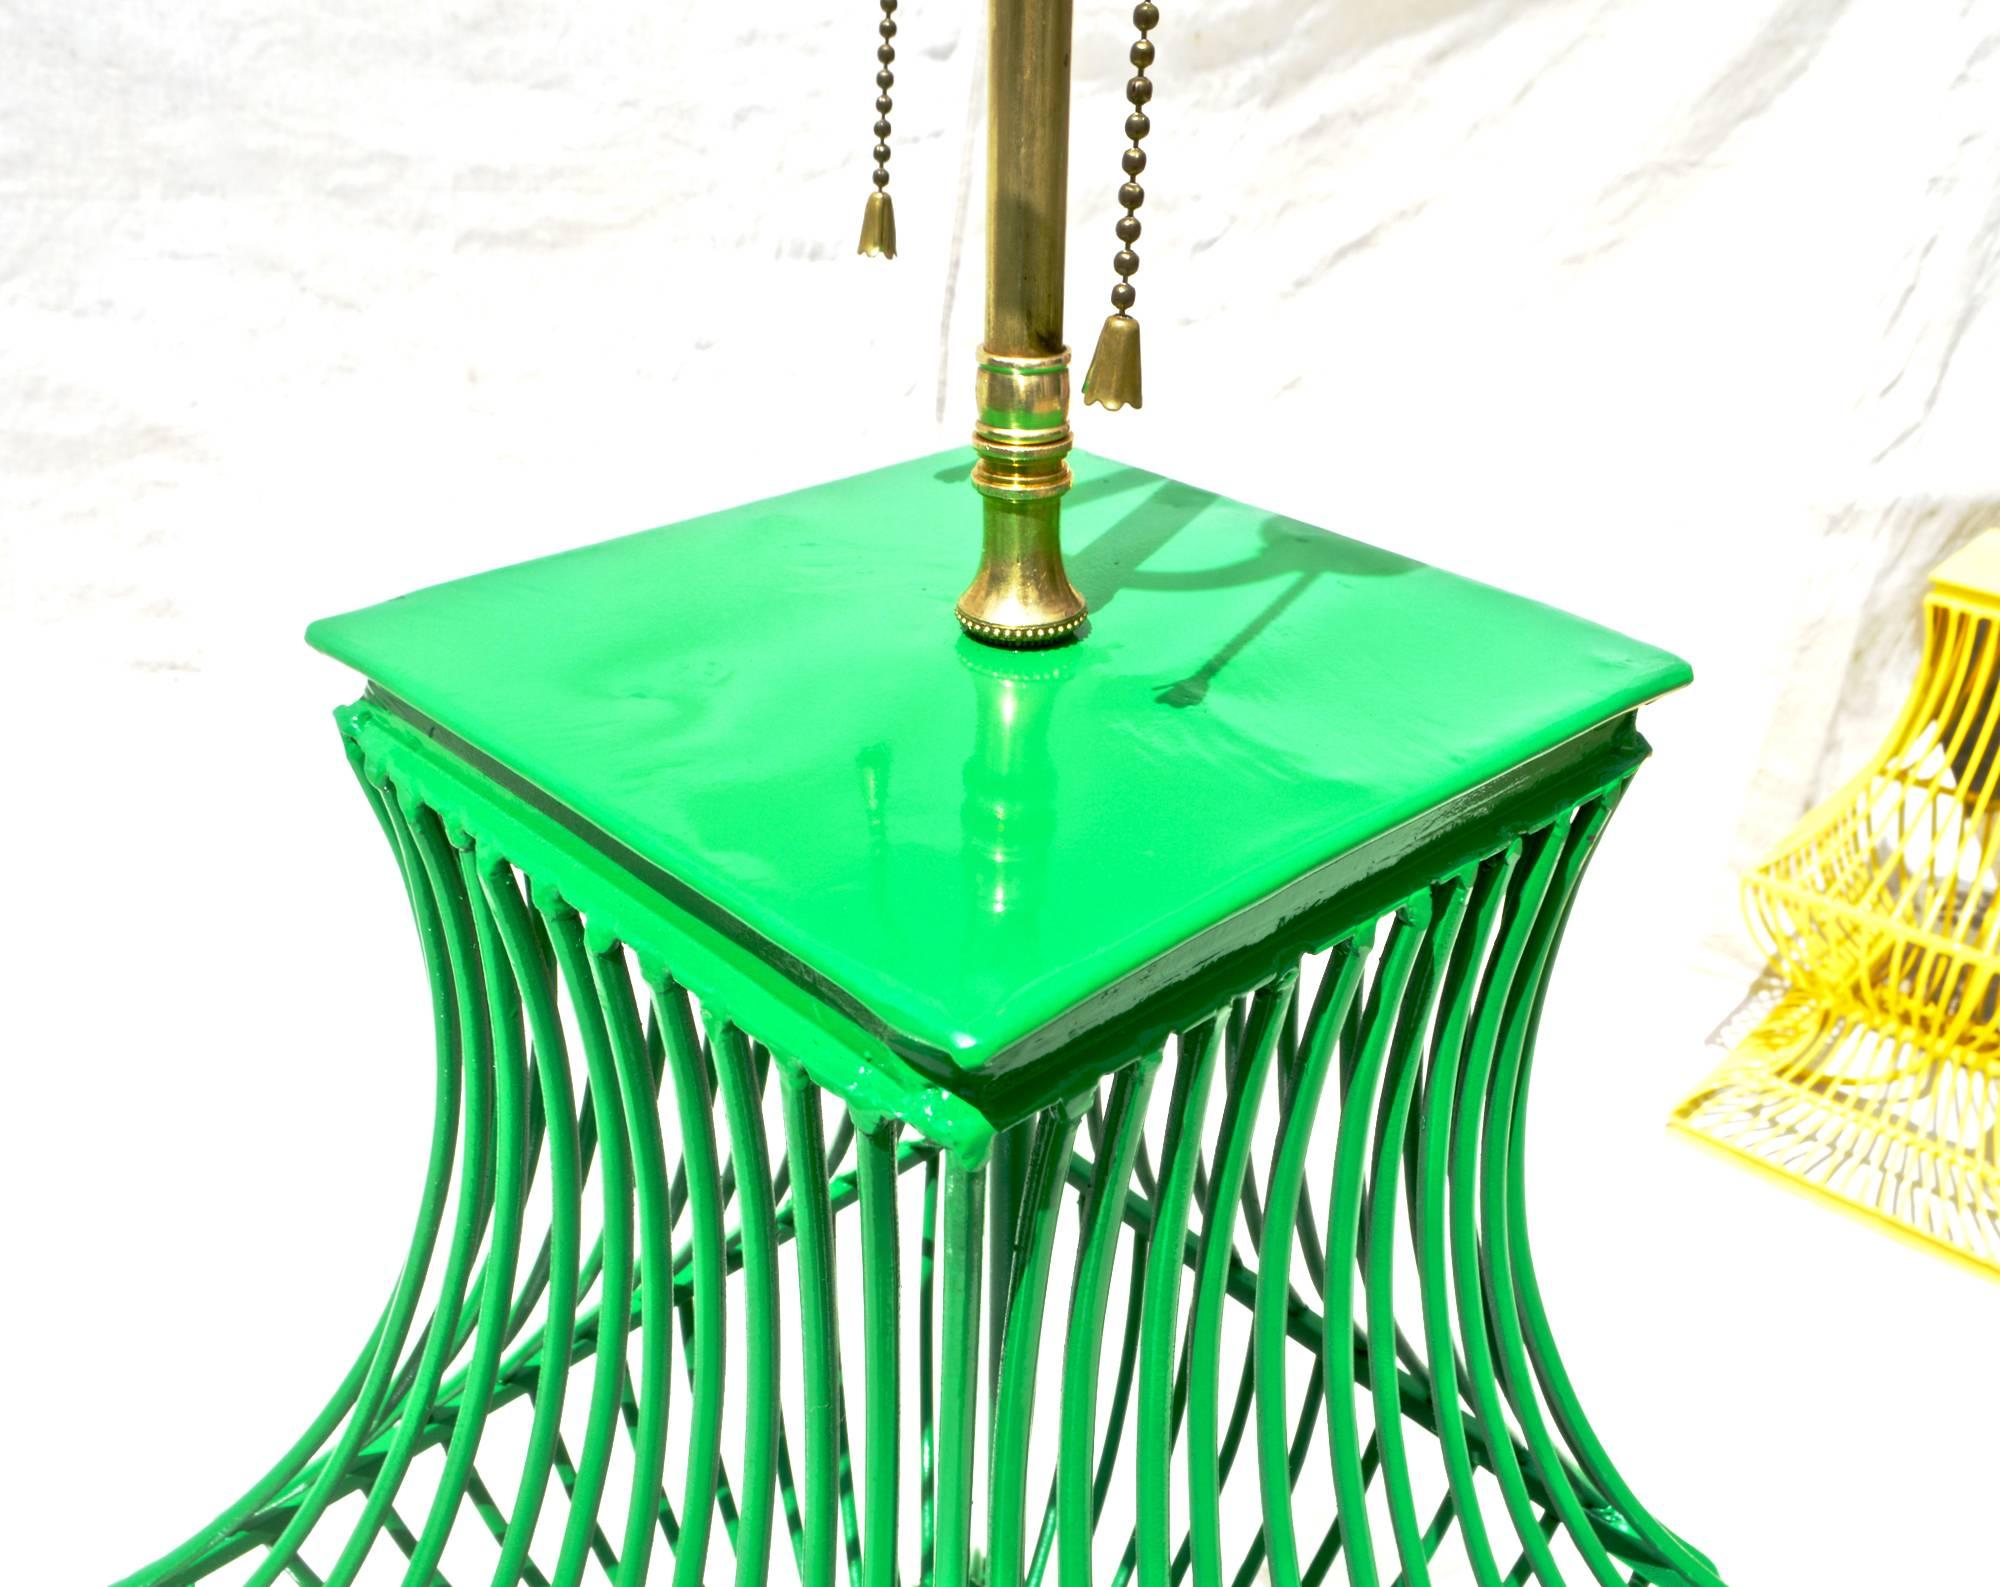 Welded Industrial Lamp of Birdcage Form